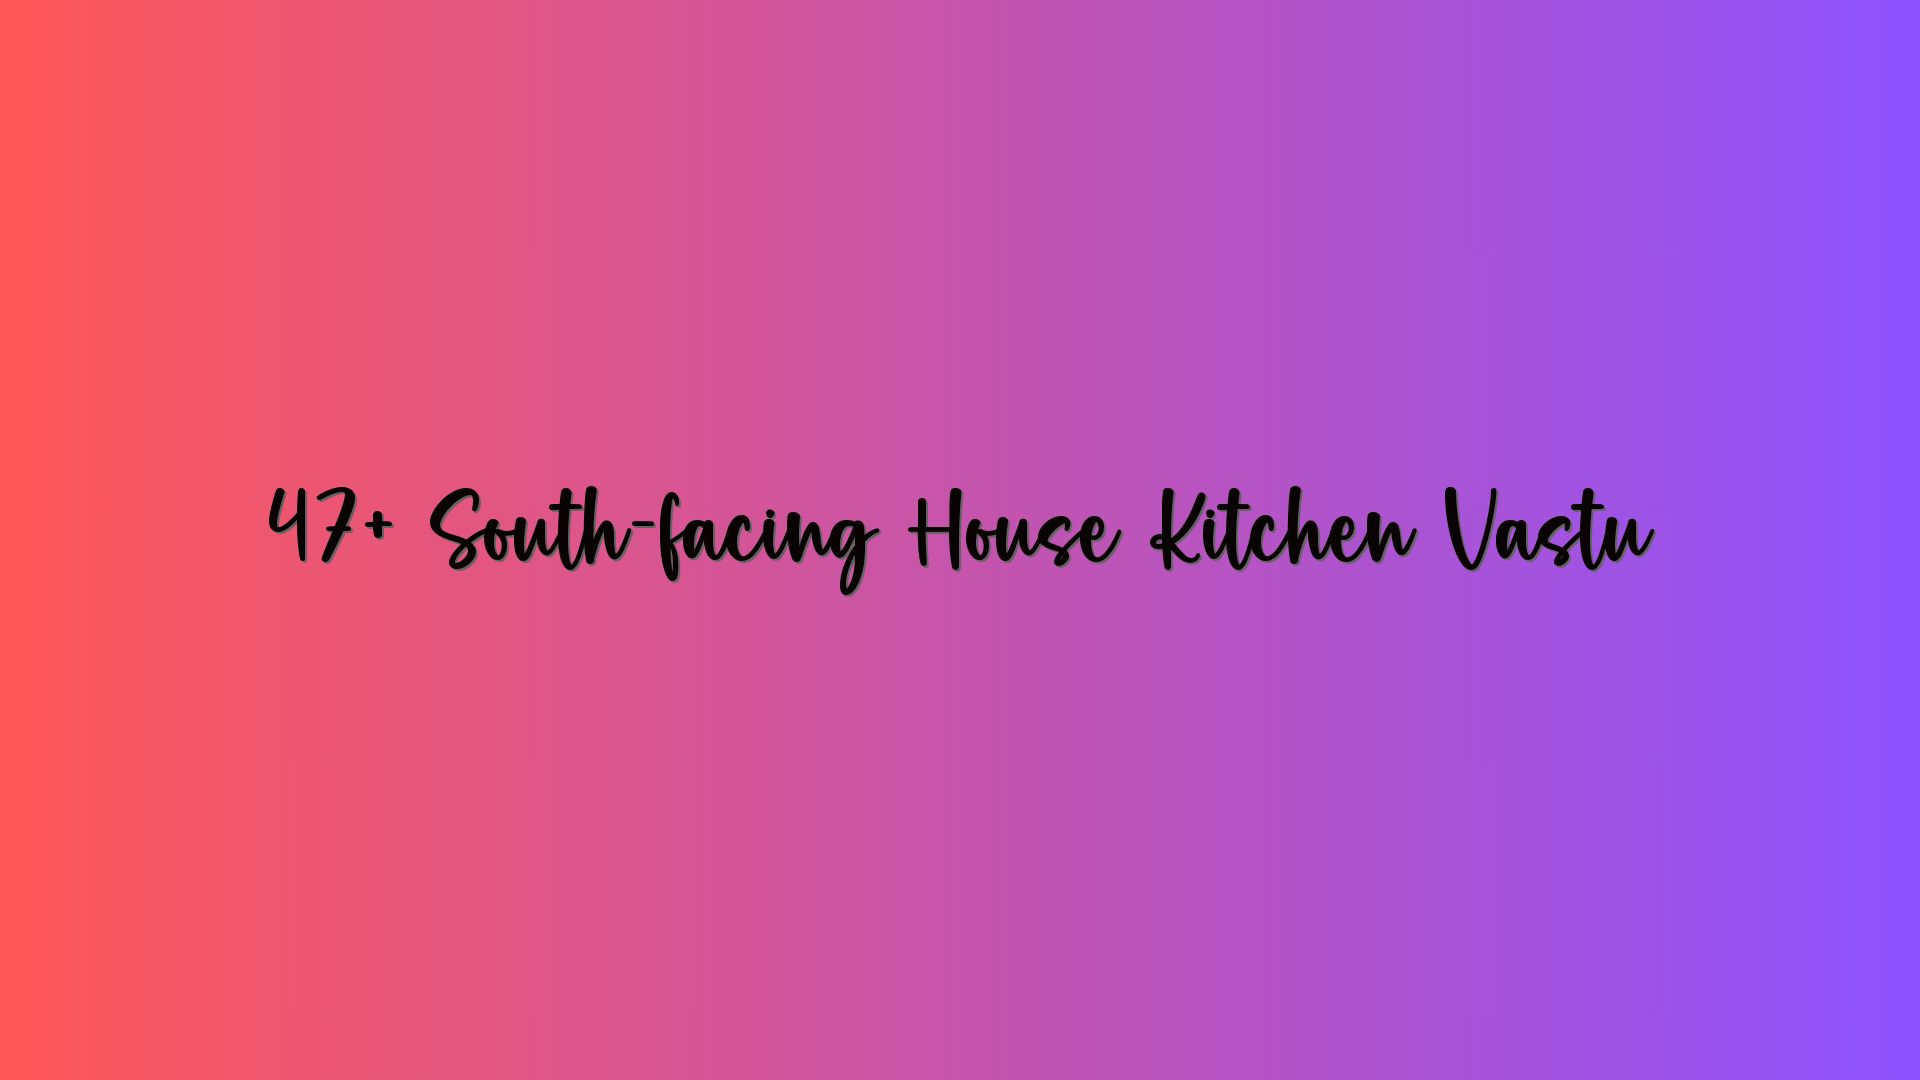 47+ South-facing House Kitchen Vastu